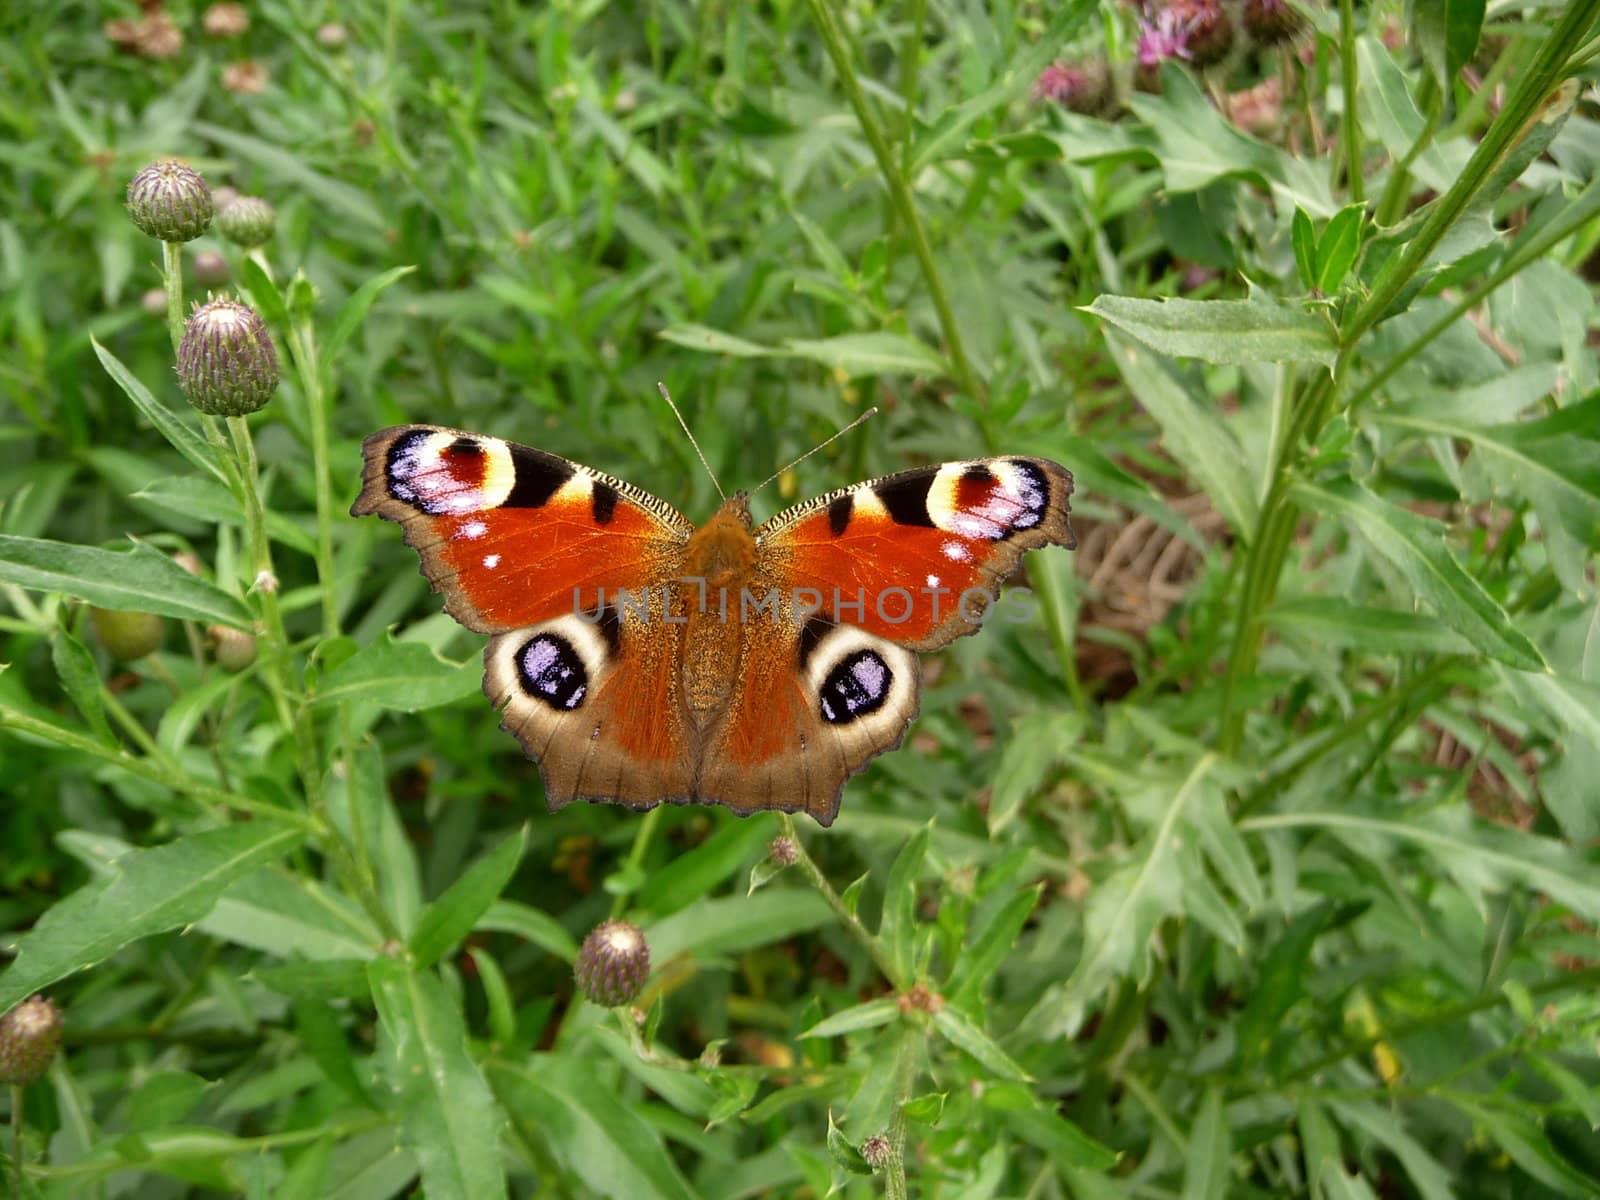 Very beautiful peacock butterfly on grass in field